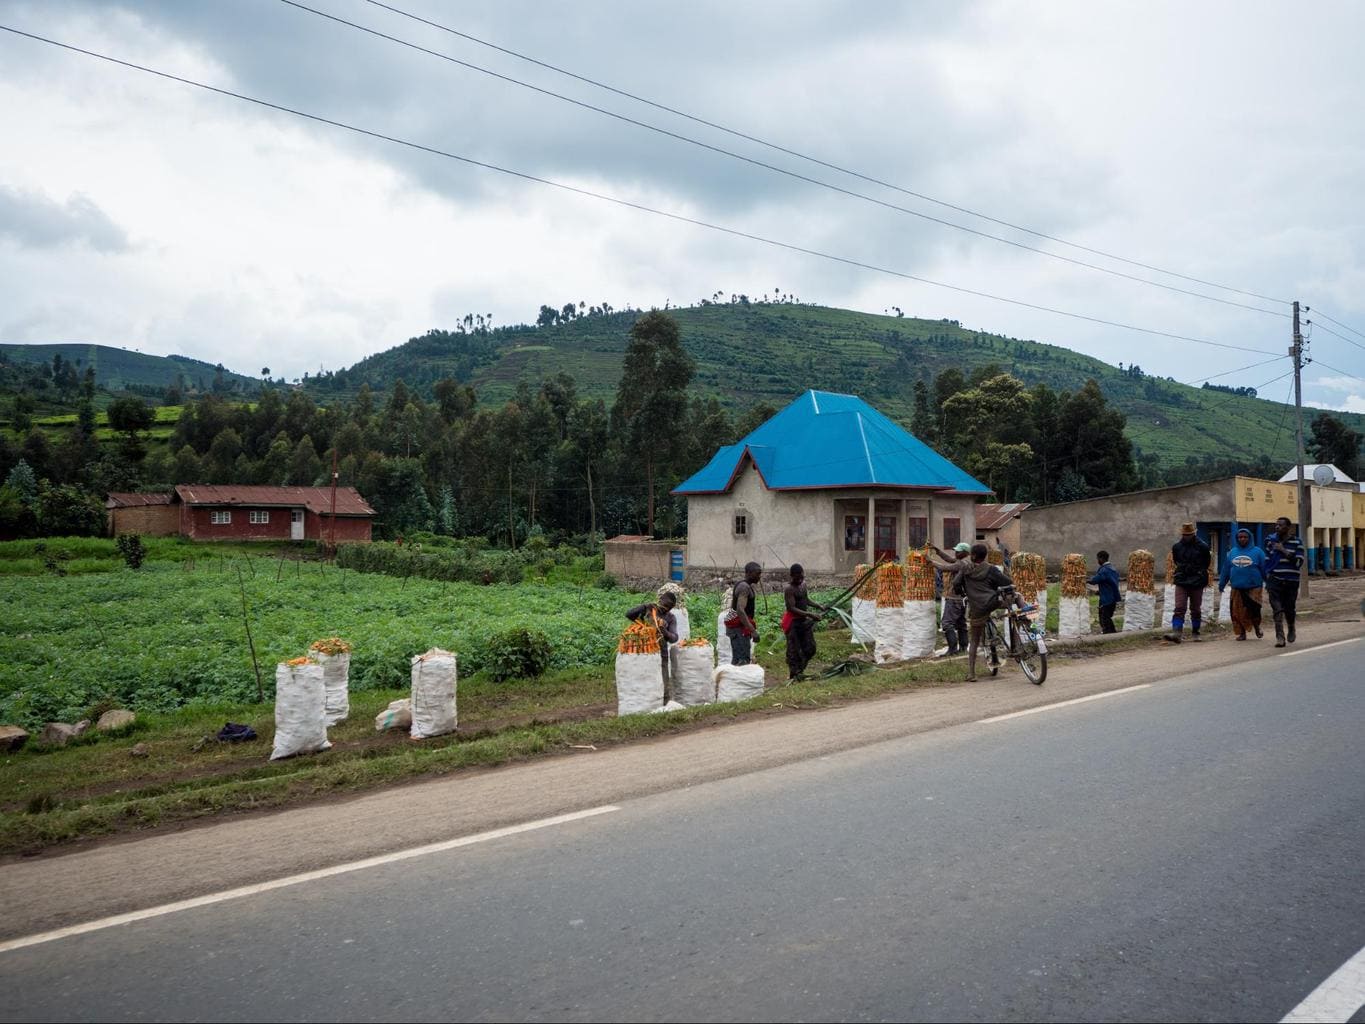 The great infrastructure in Rwanda